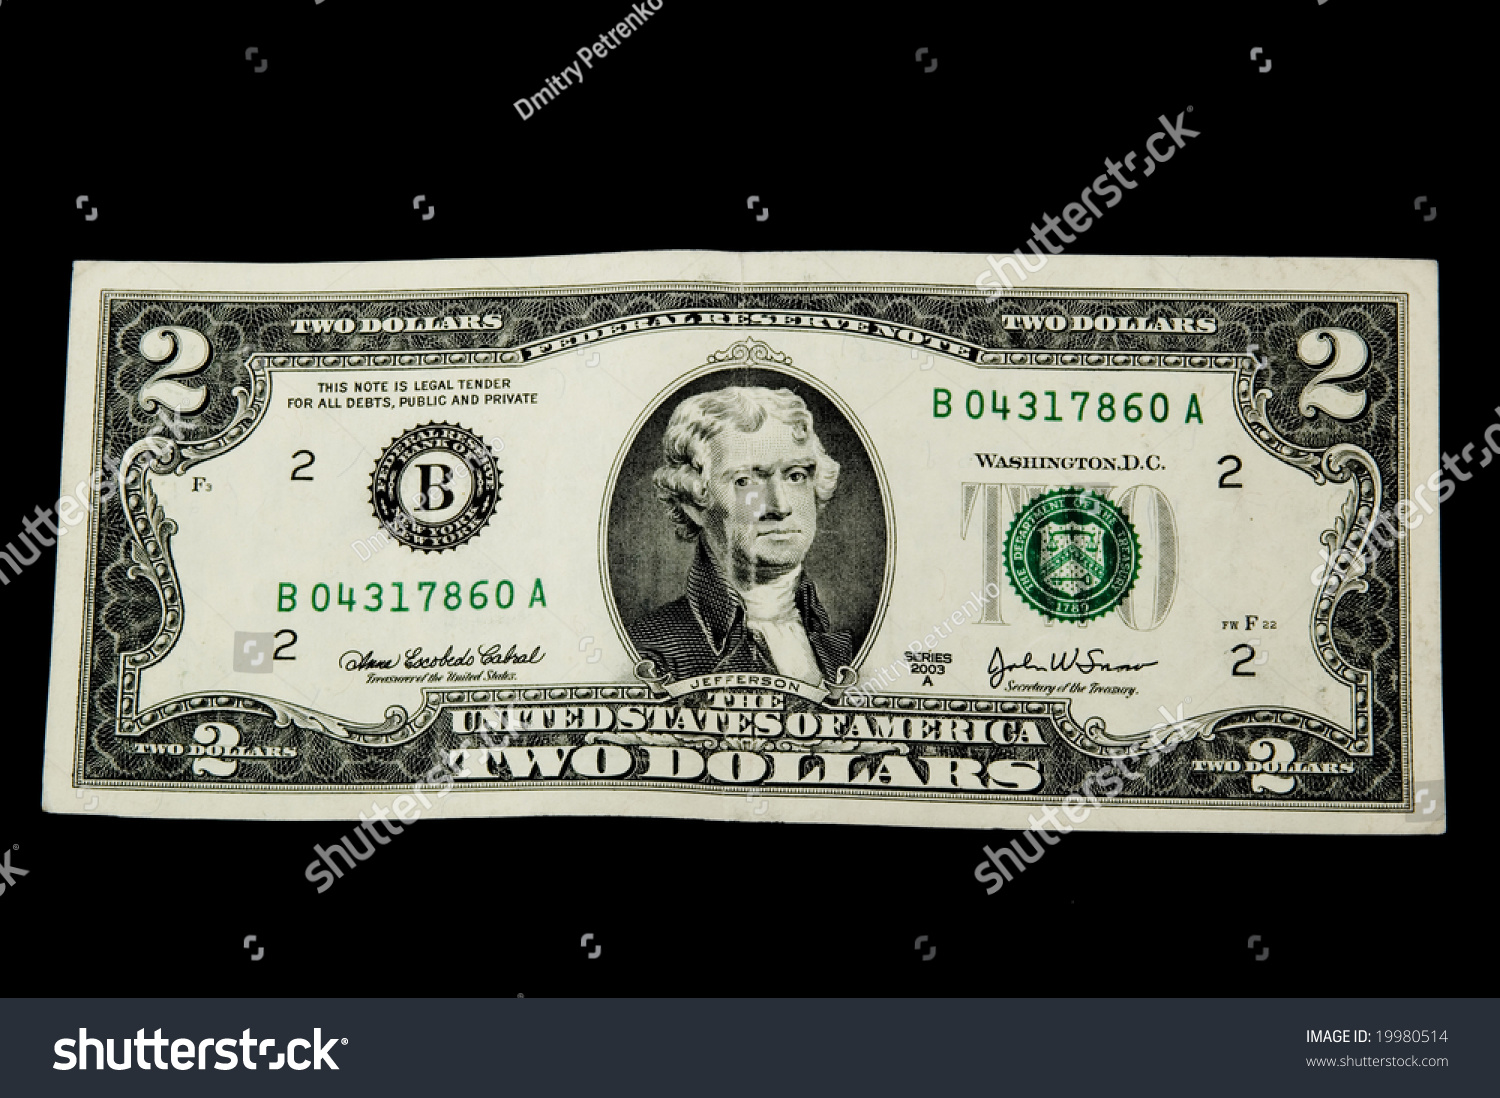 2 Dollars Stock Photo 19980514 : Shutterstock